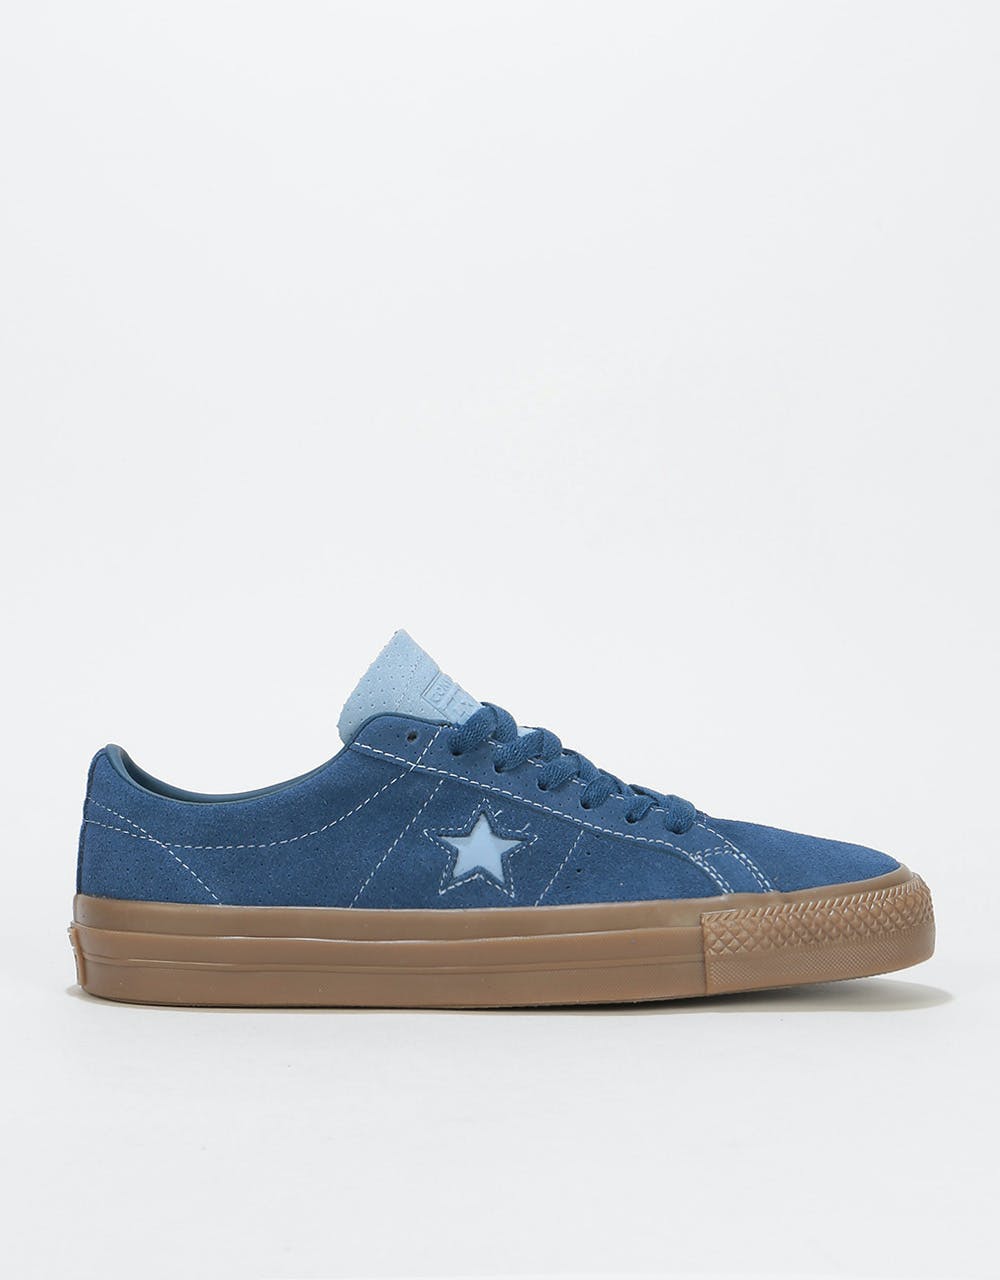 Converse One Star Pro Ox Skate Shoes - Navy/Indigo Fog/Brown